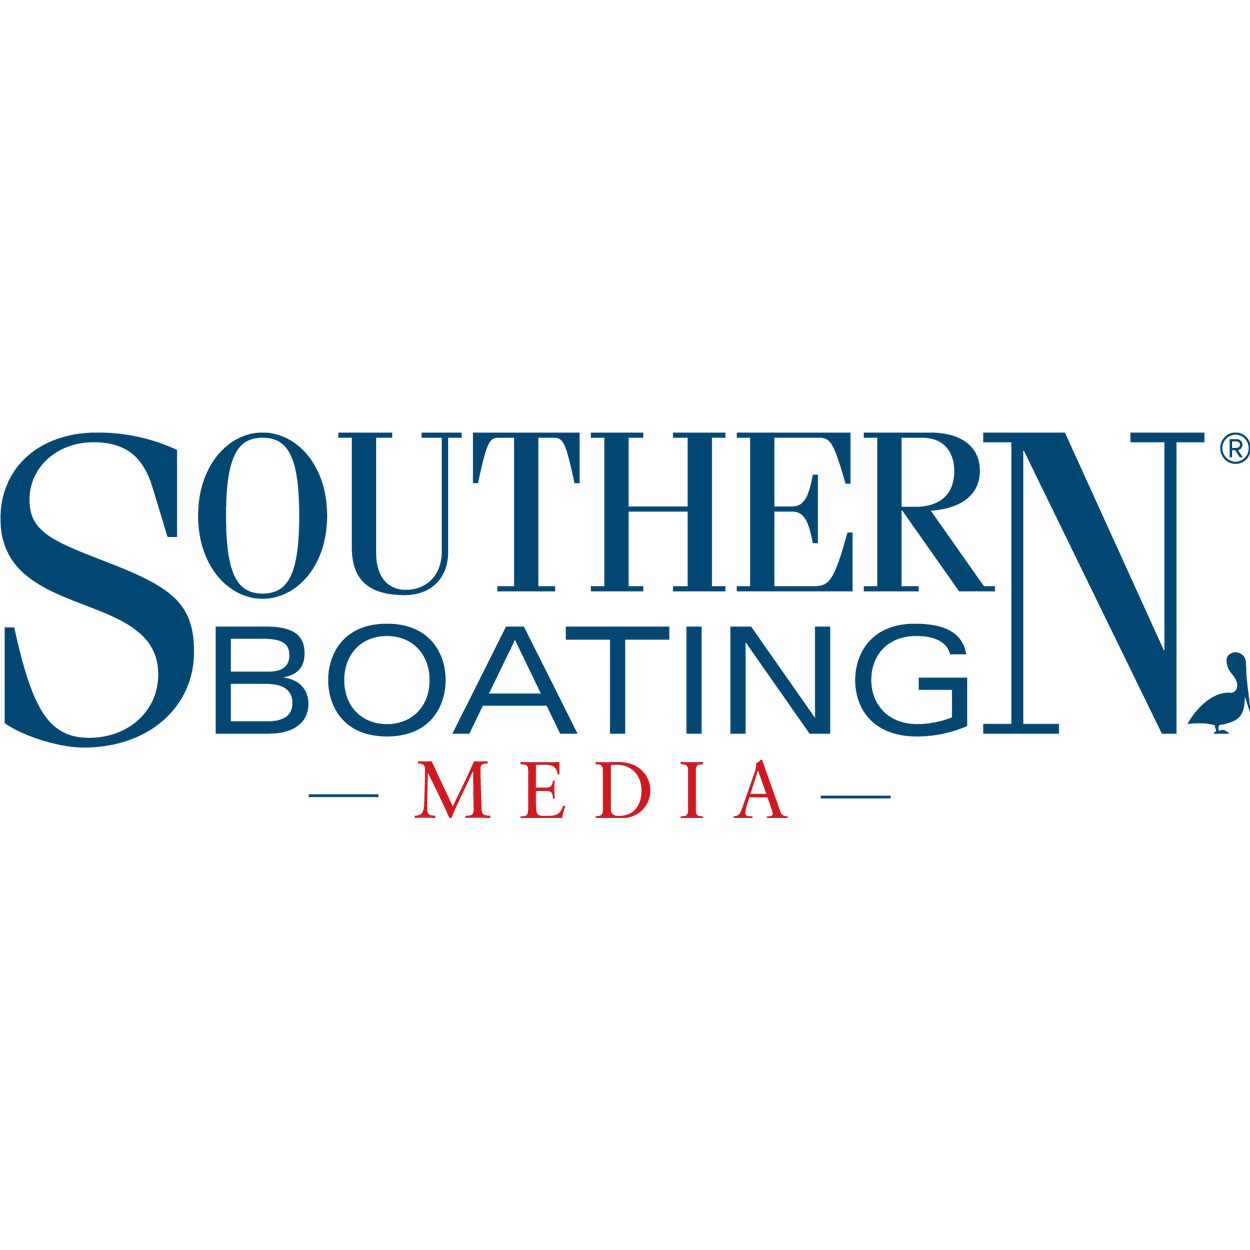 Southern Boating Media logo